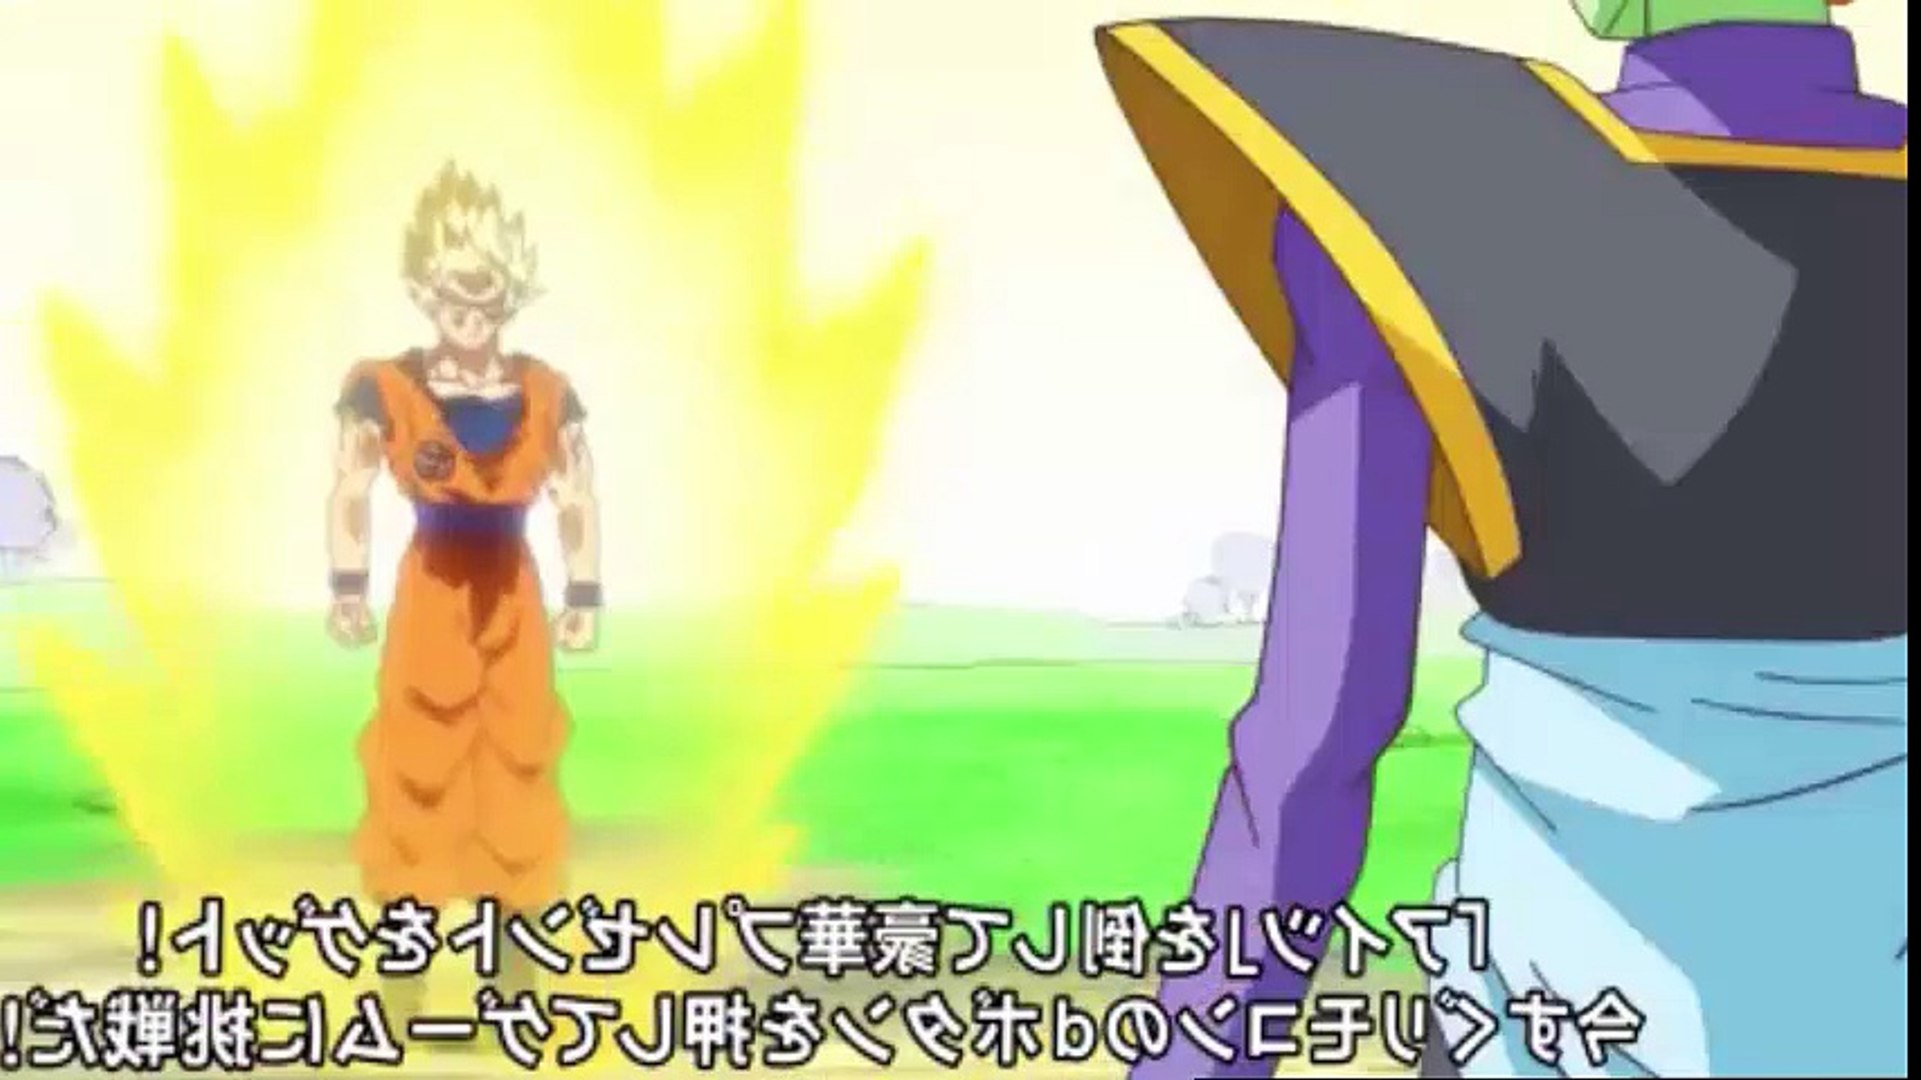 Dragon Ball Super「AMV」 - Goku VS Black Goku And Zamasu - My Fight - video  Dailymotion